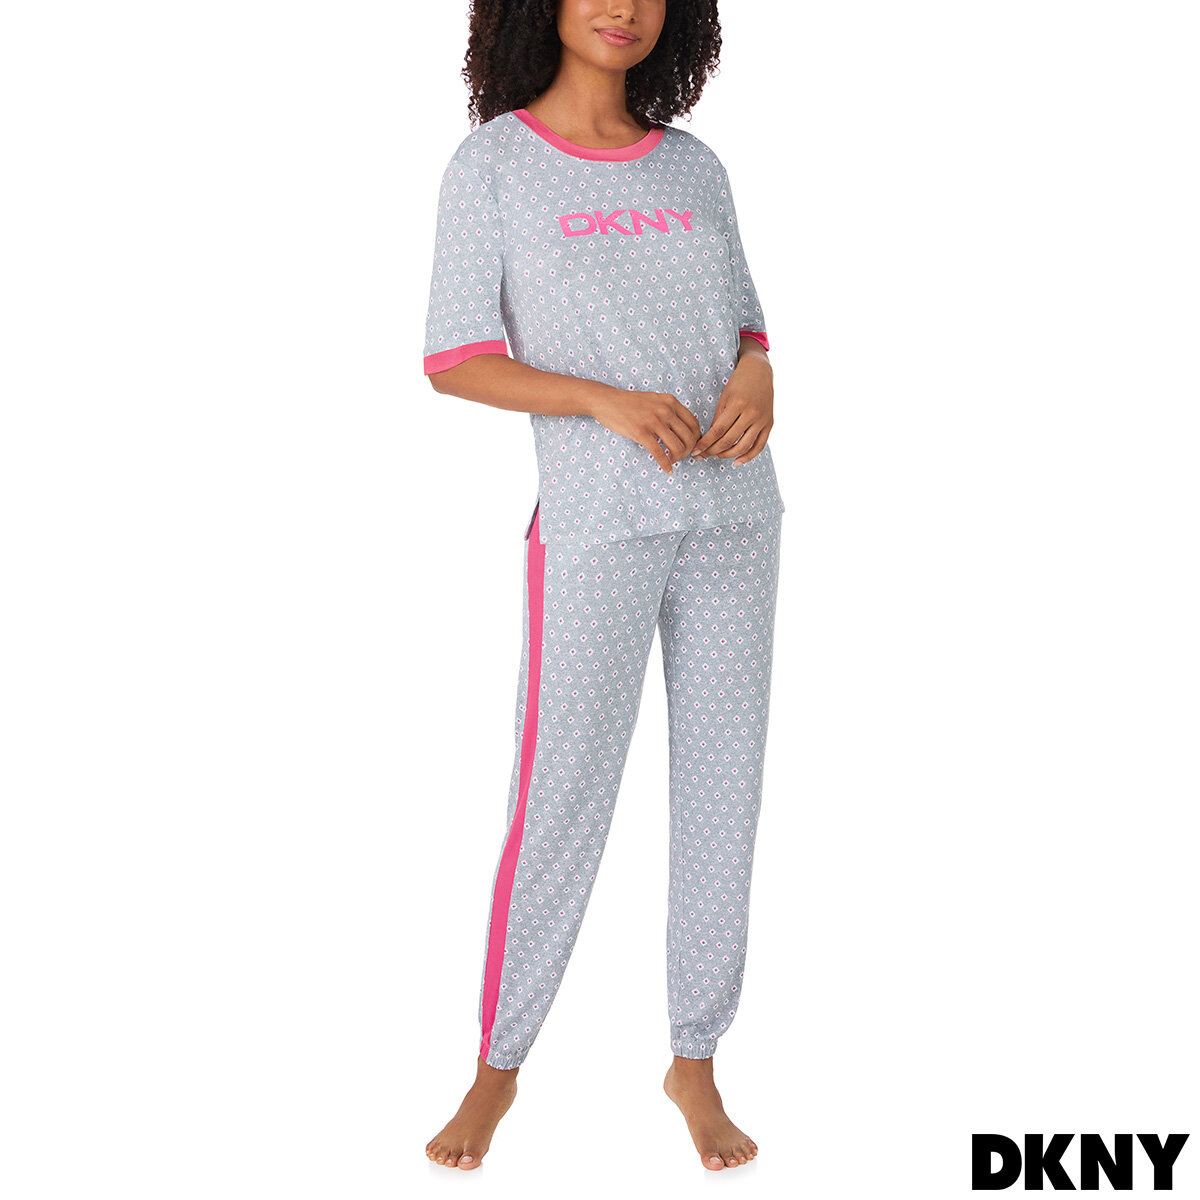 DKNY Ladies Short Sleeve Tee & Jogger Lounge Set in Grey